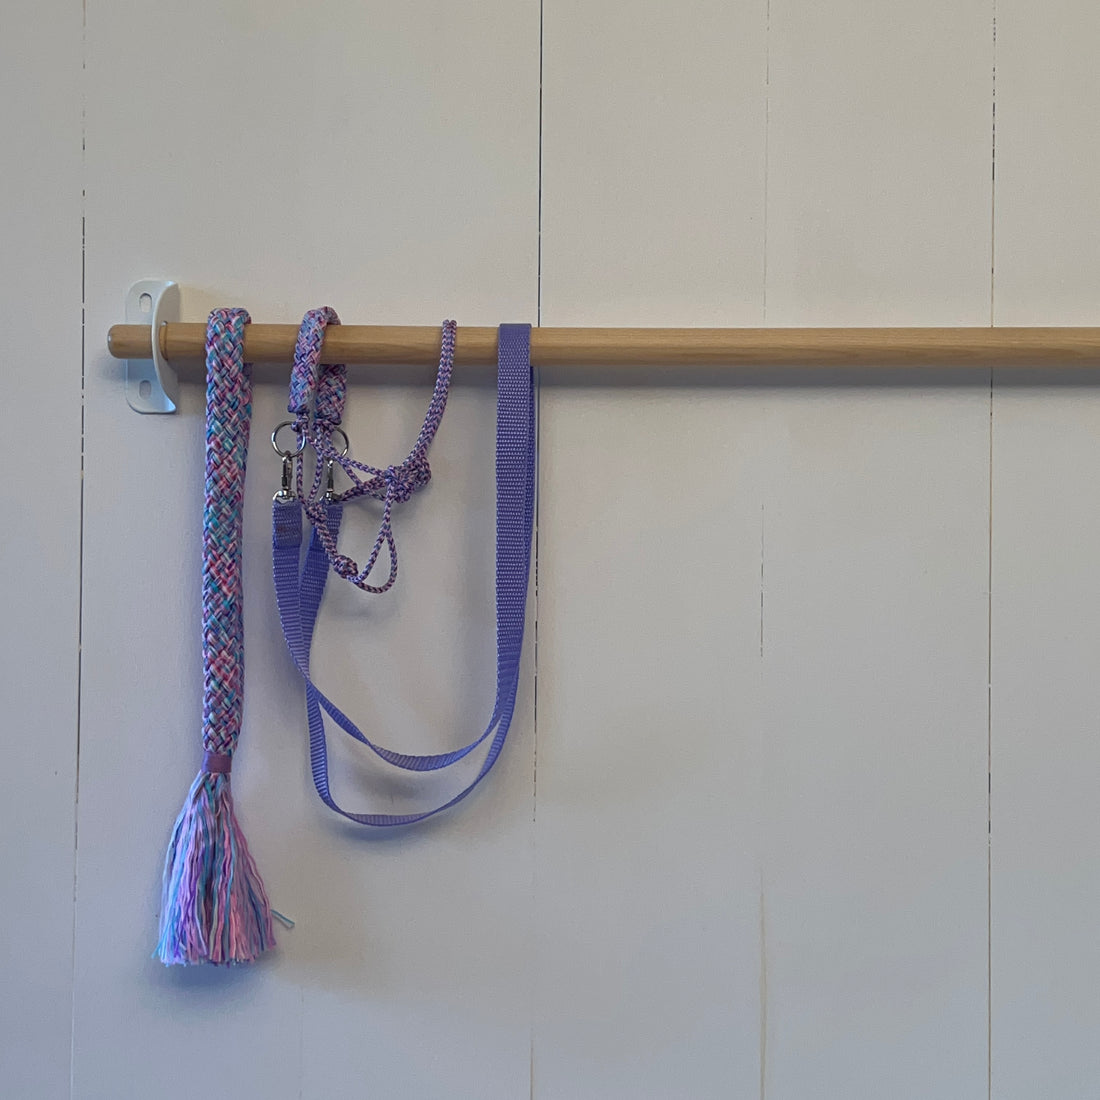 Rope set muti color lilac / purple / white / pink